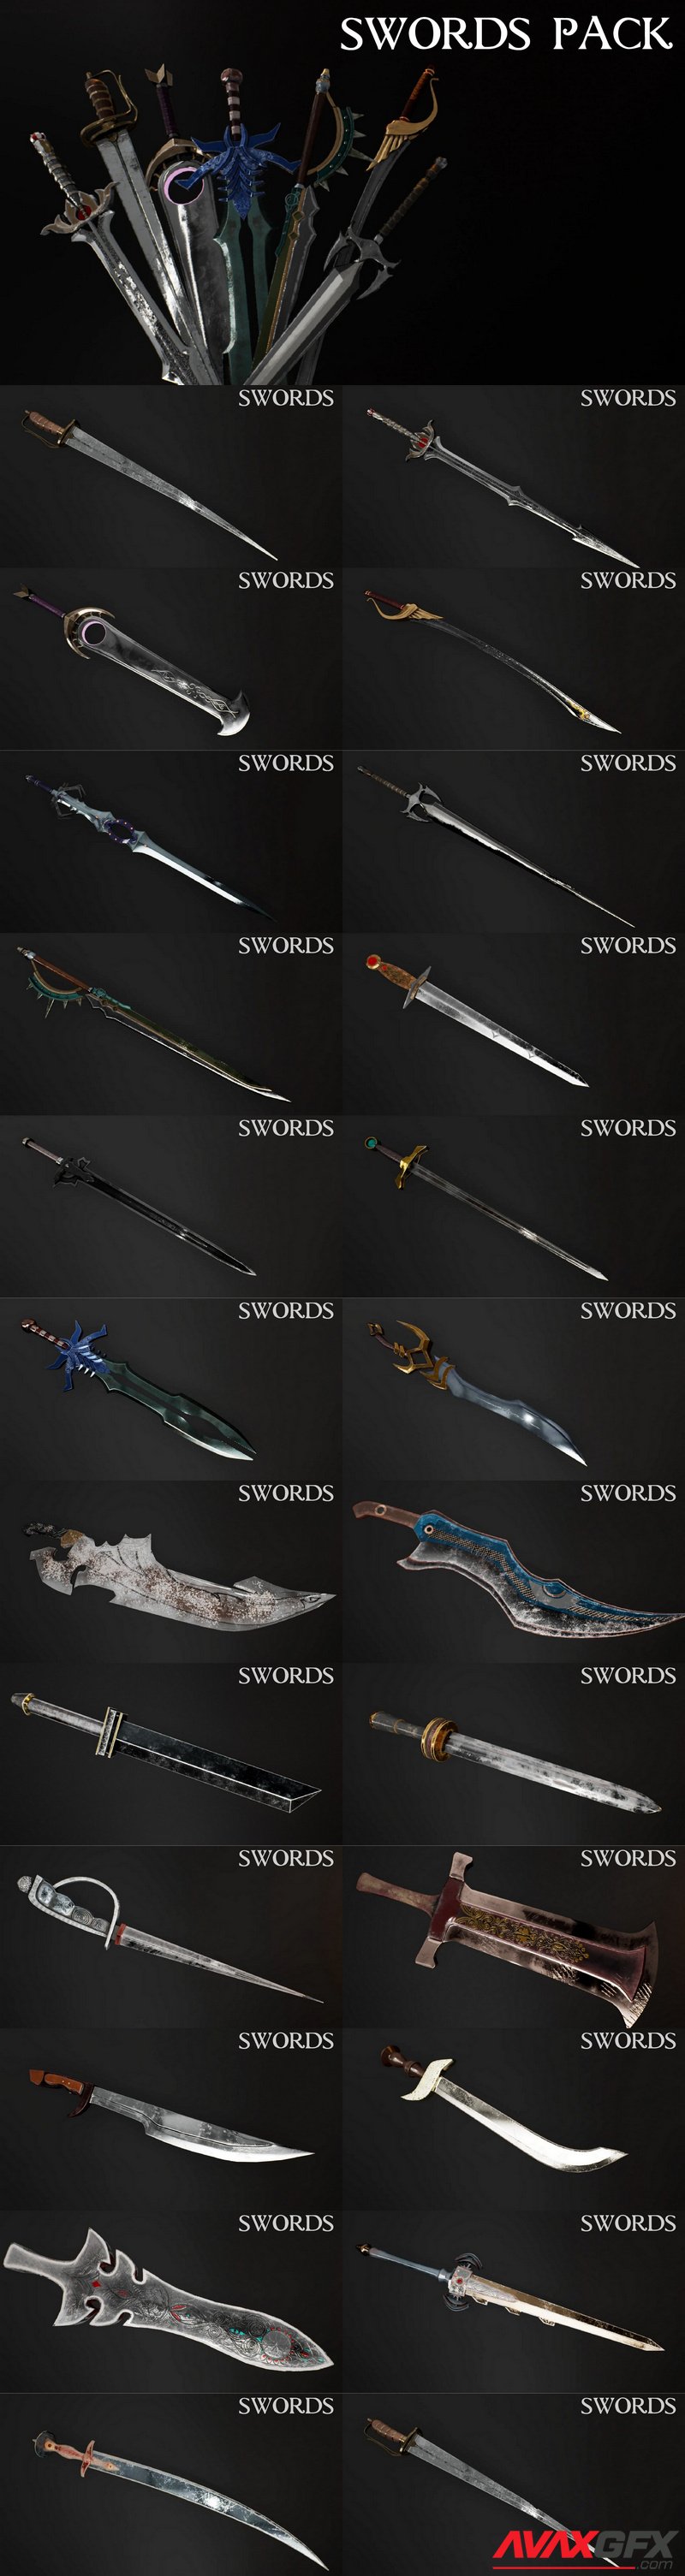 Swords Pack